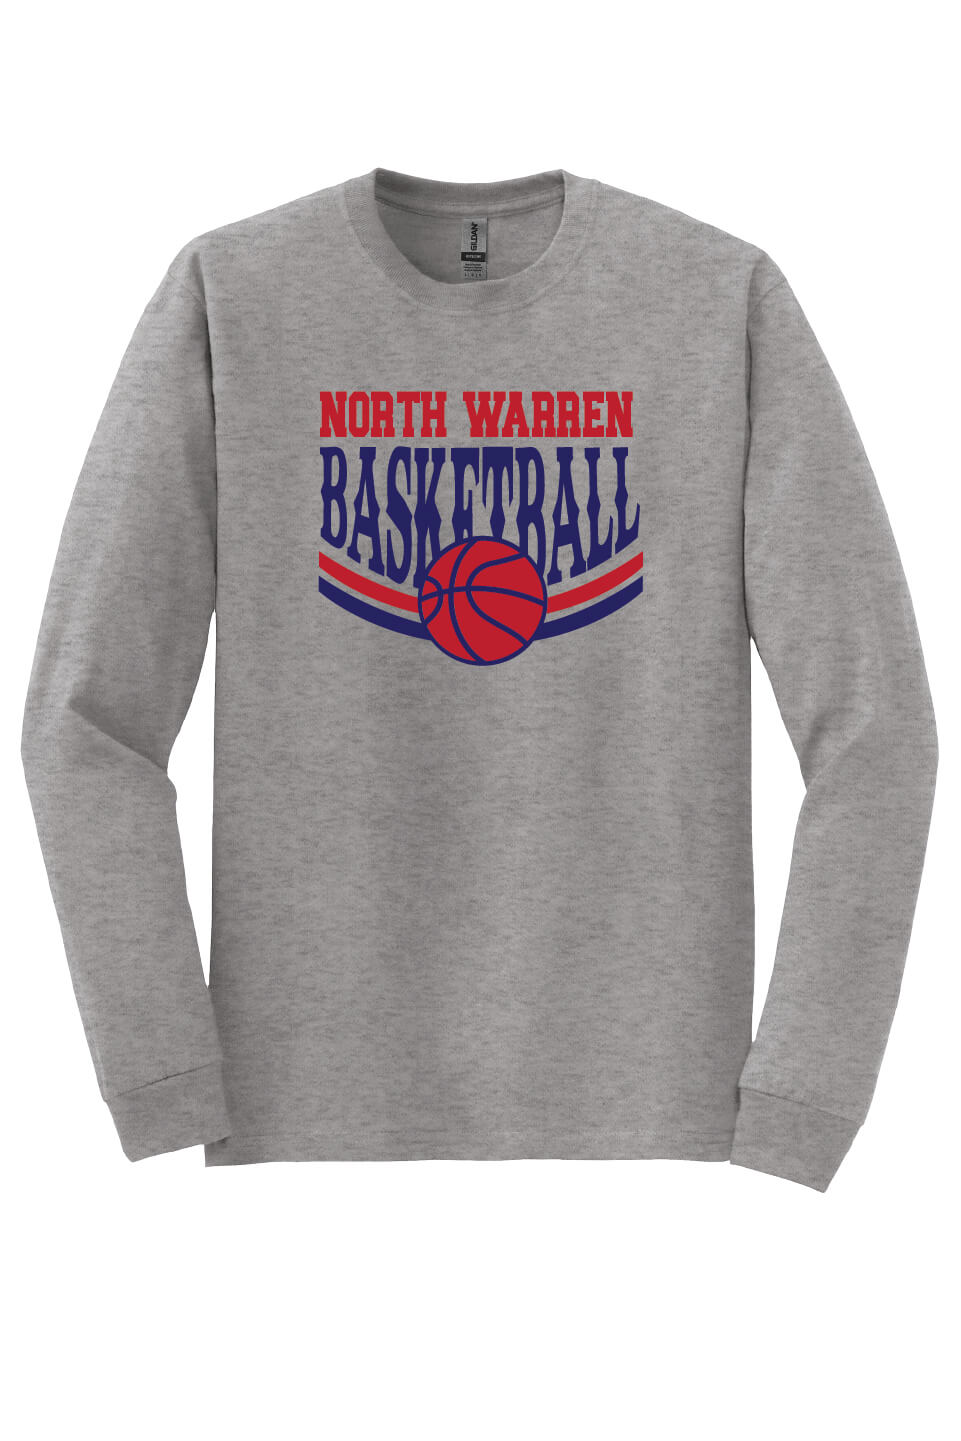 NW Basketball Long Sleeve T-Shirt (Youth) gray